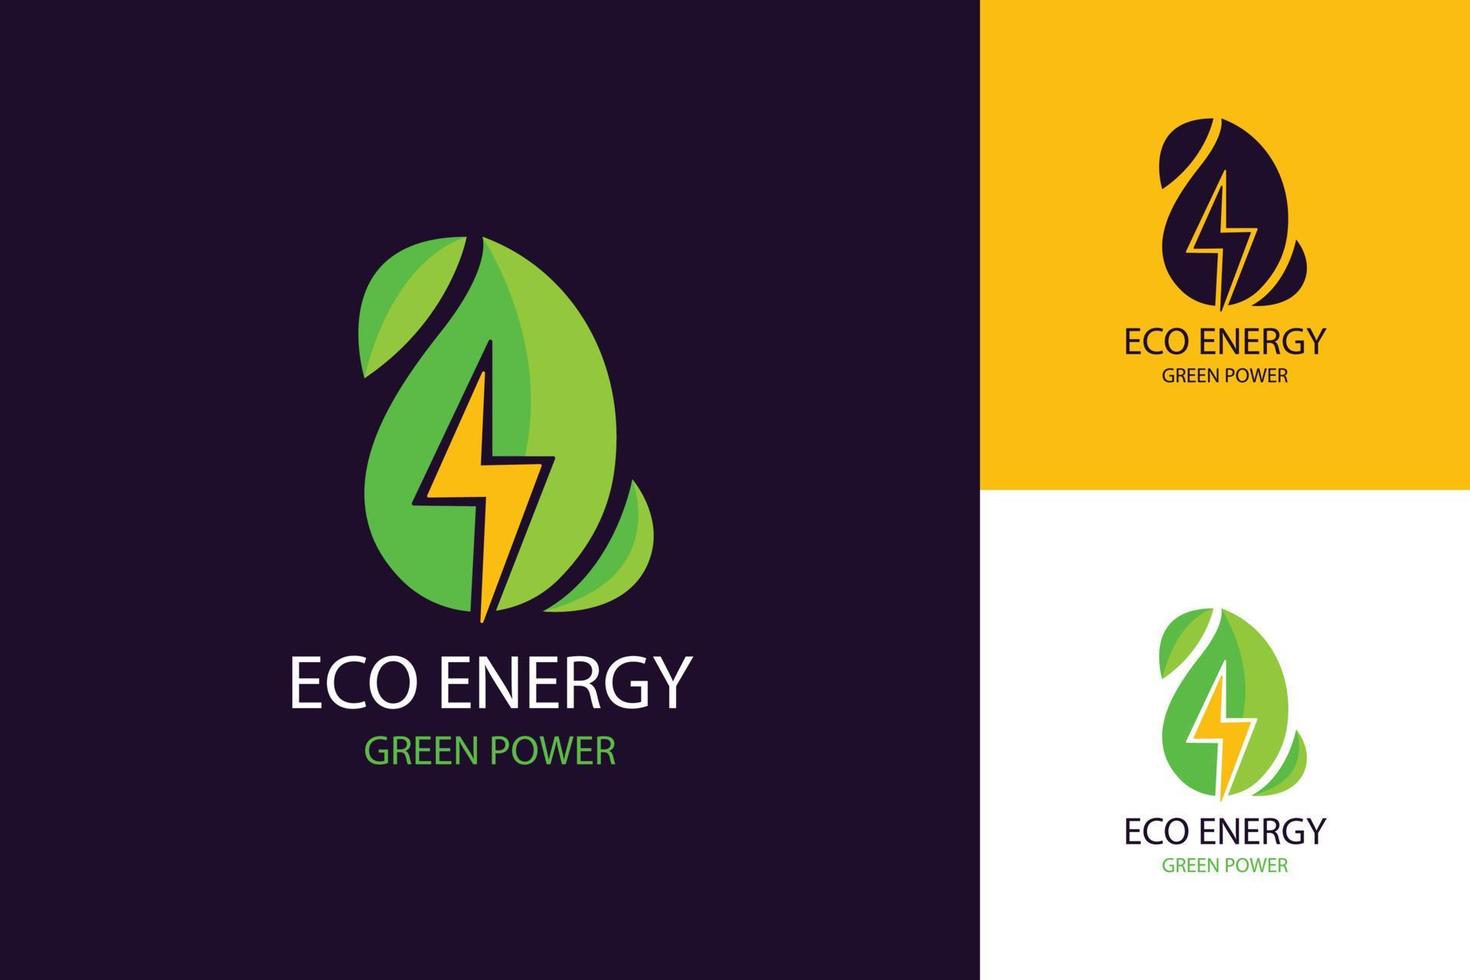 flat design renewable energy logo template vector